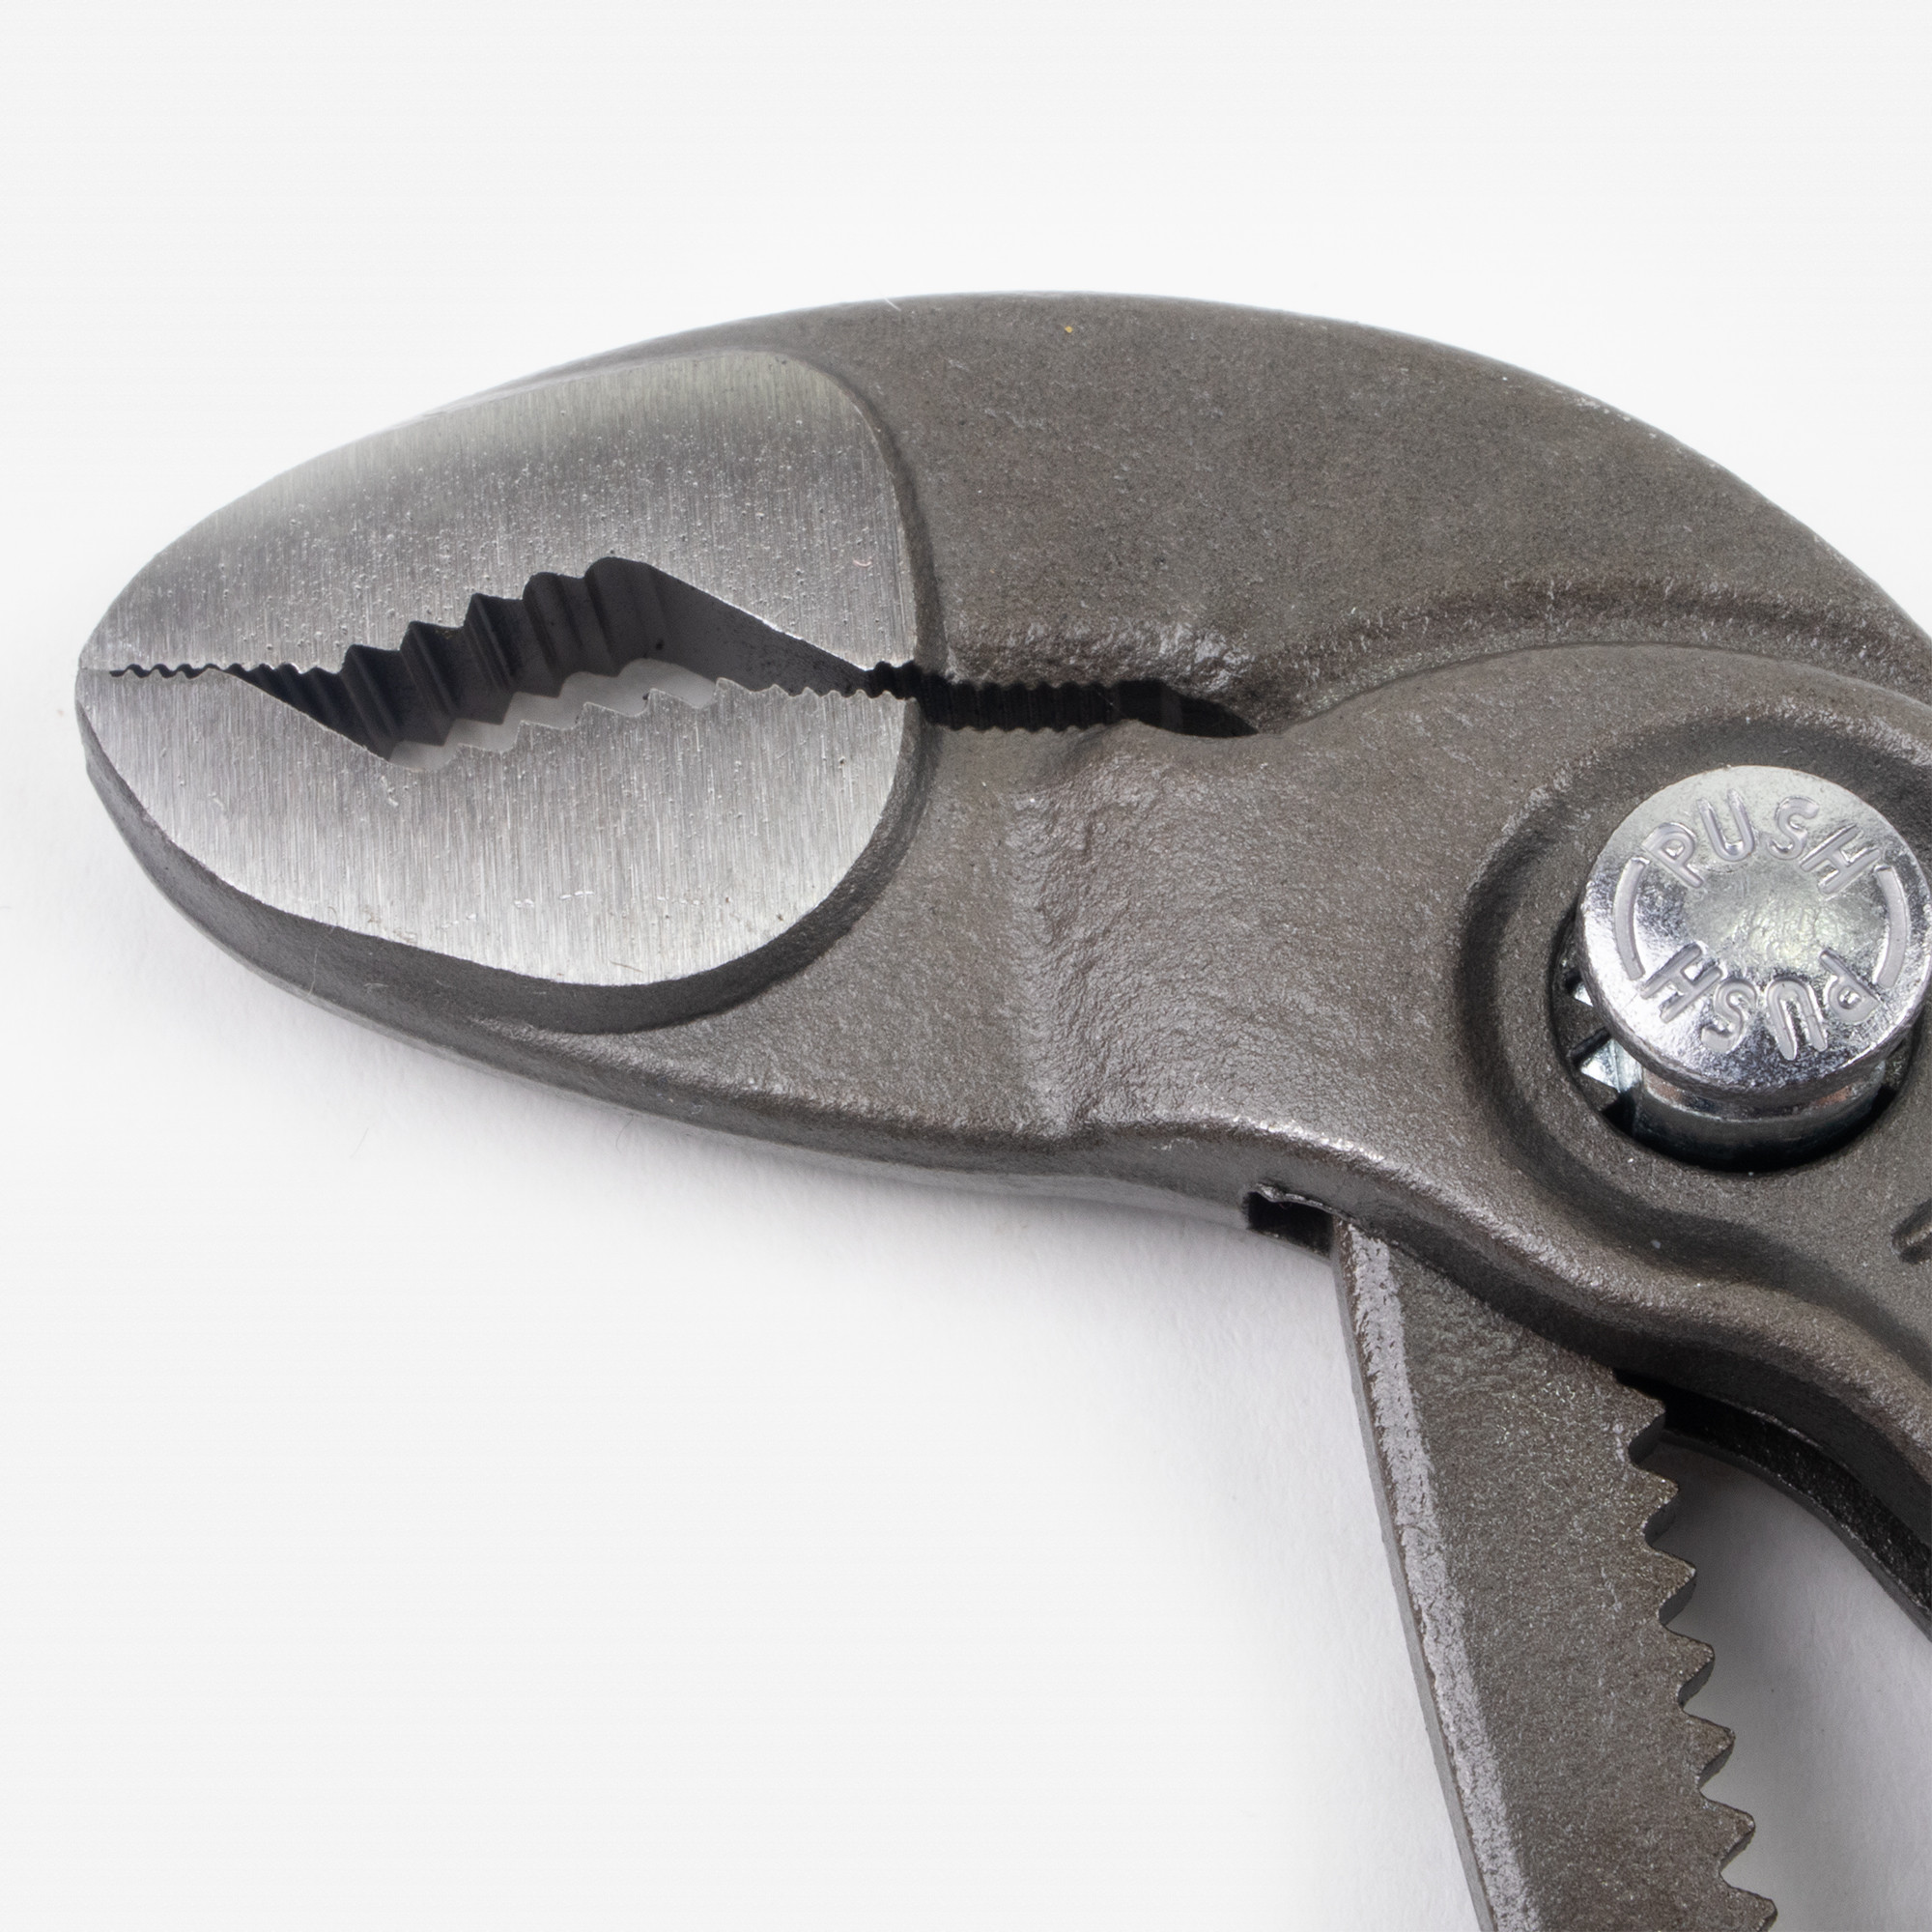 Knipex, 87 01 180, 7-1/4 Knipex Cobra Water Pump Pliers, Plastic Grip:  : Tools & Home Improvement